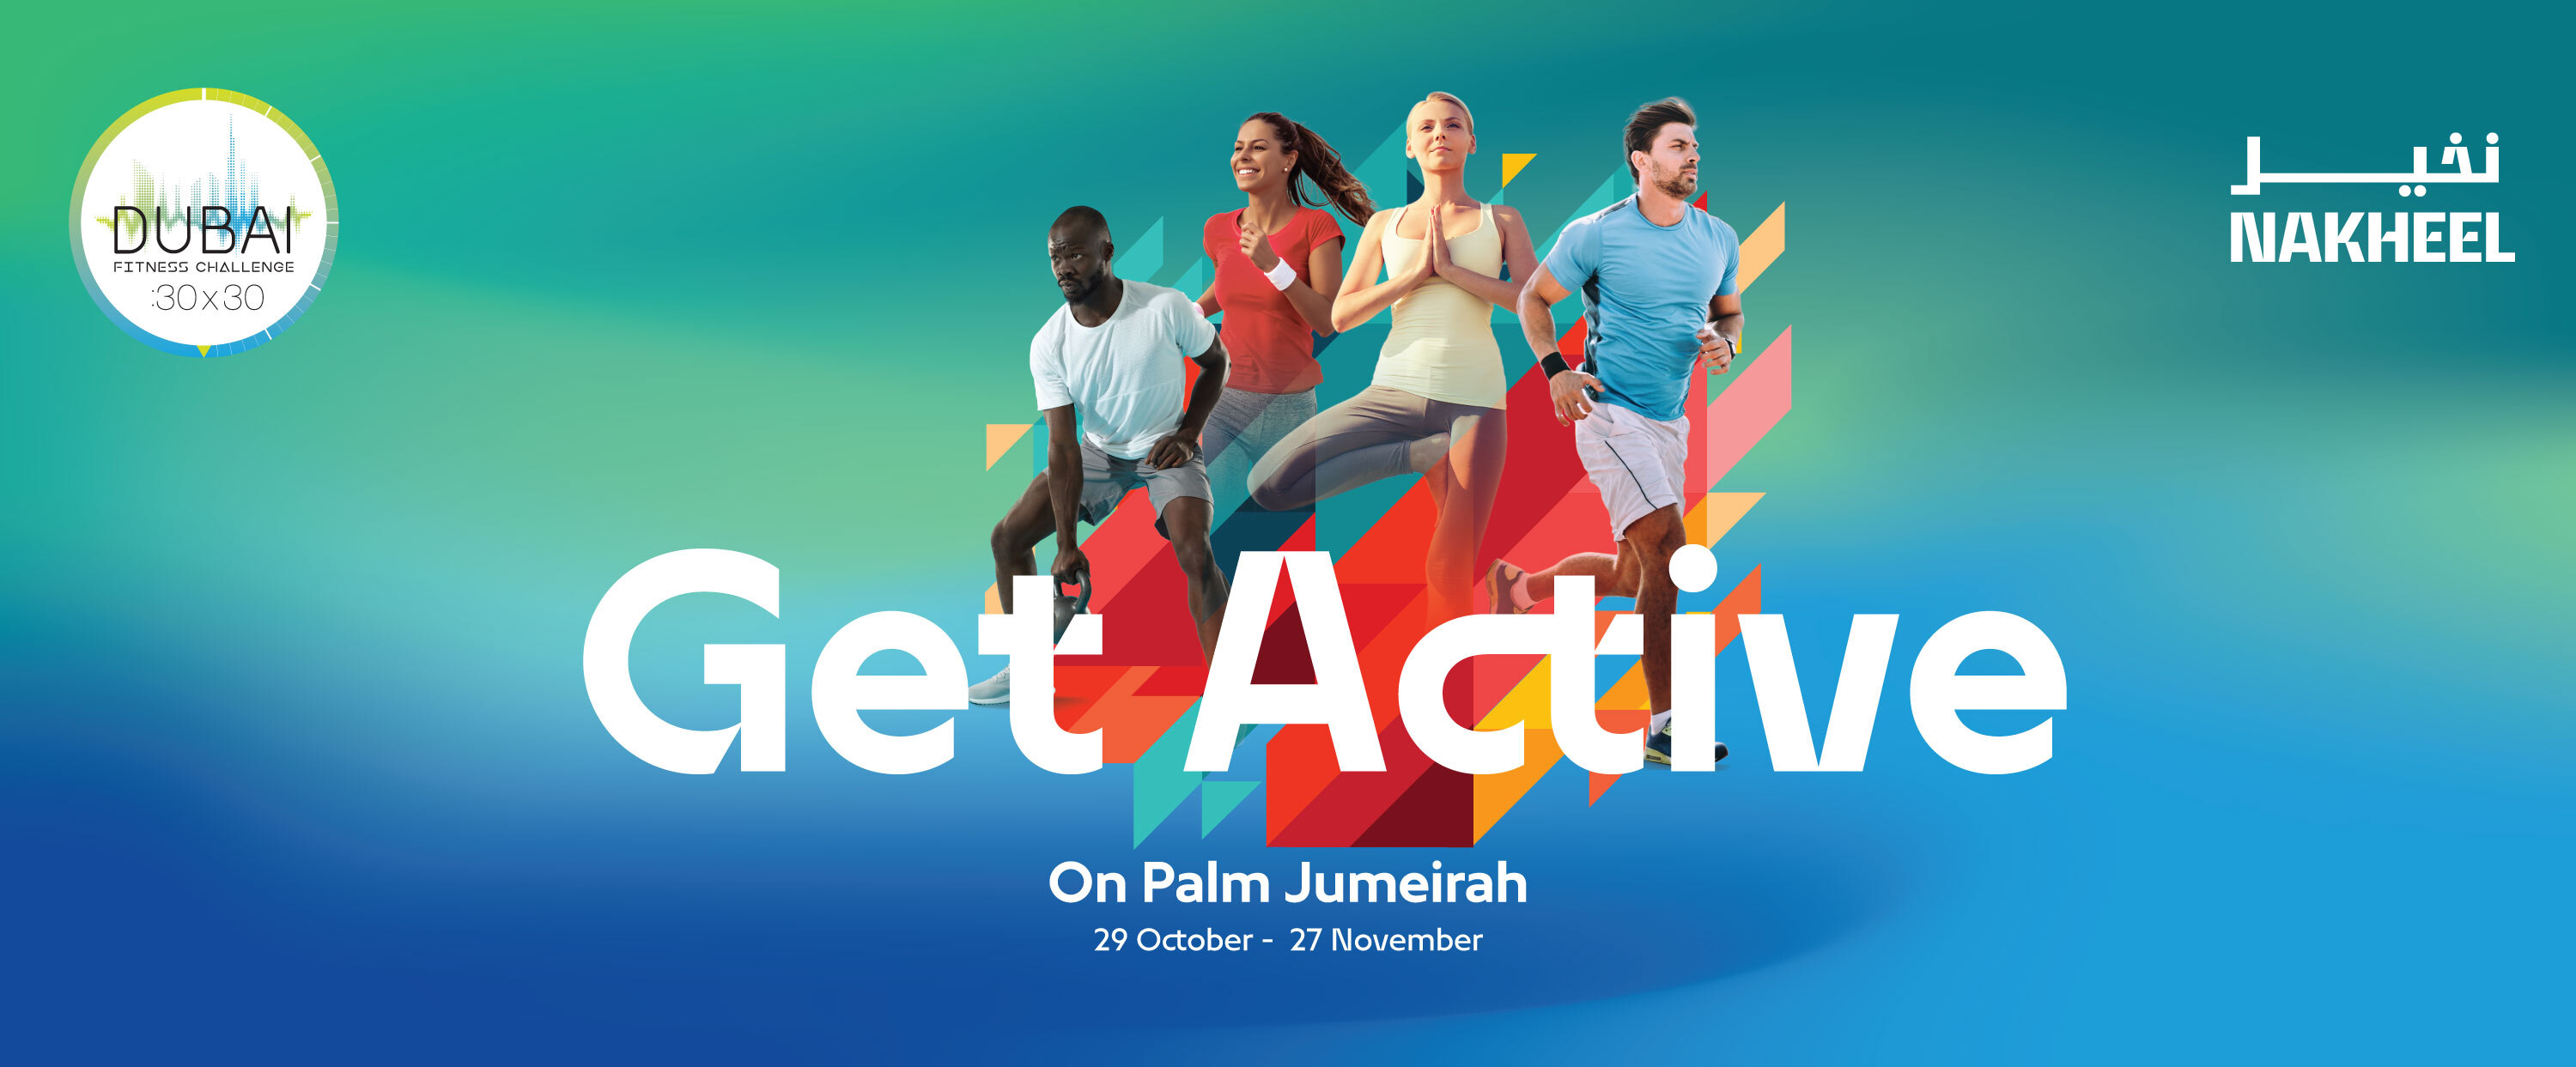 Get active on Palm Jumeirah